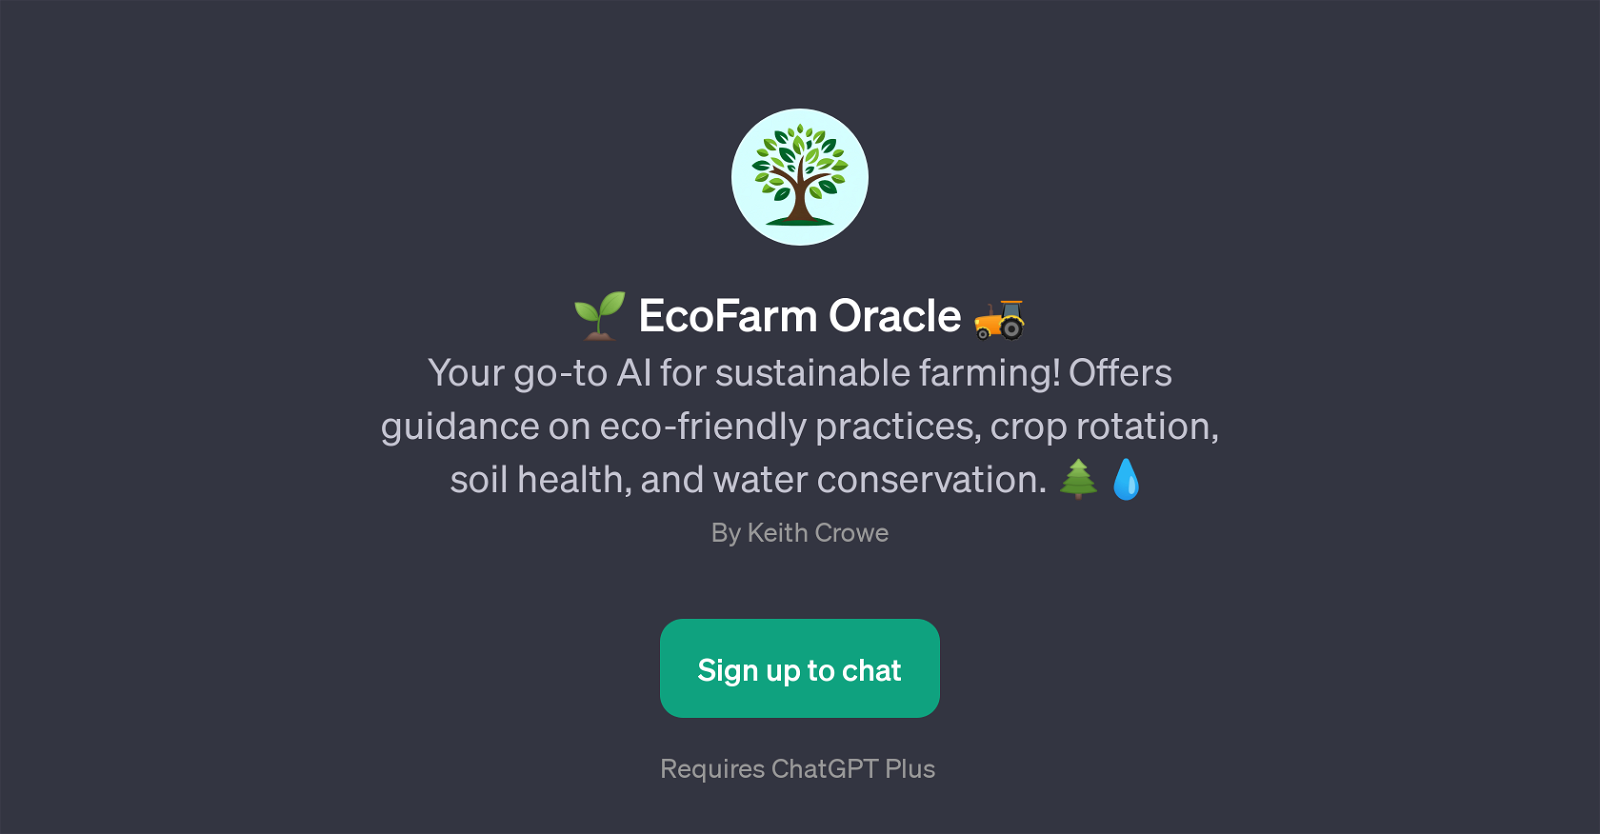 EcoFarm Oracle website